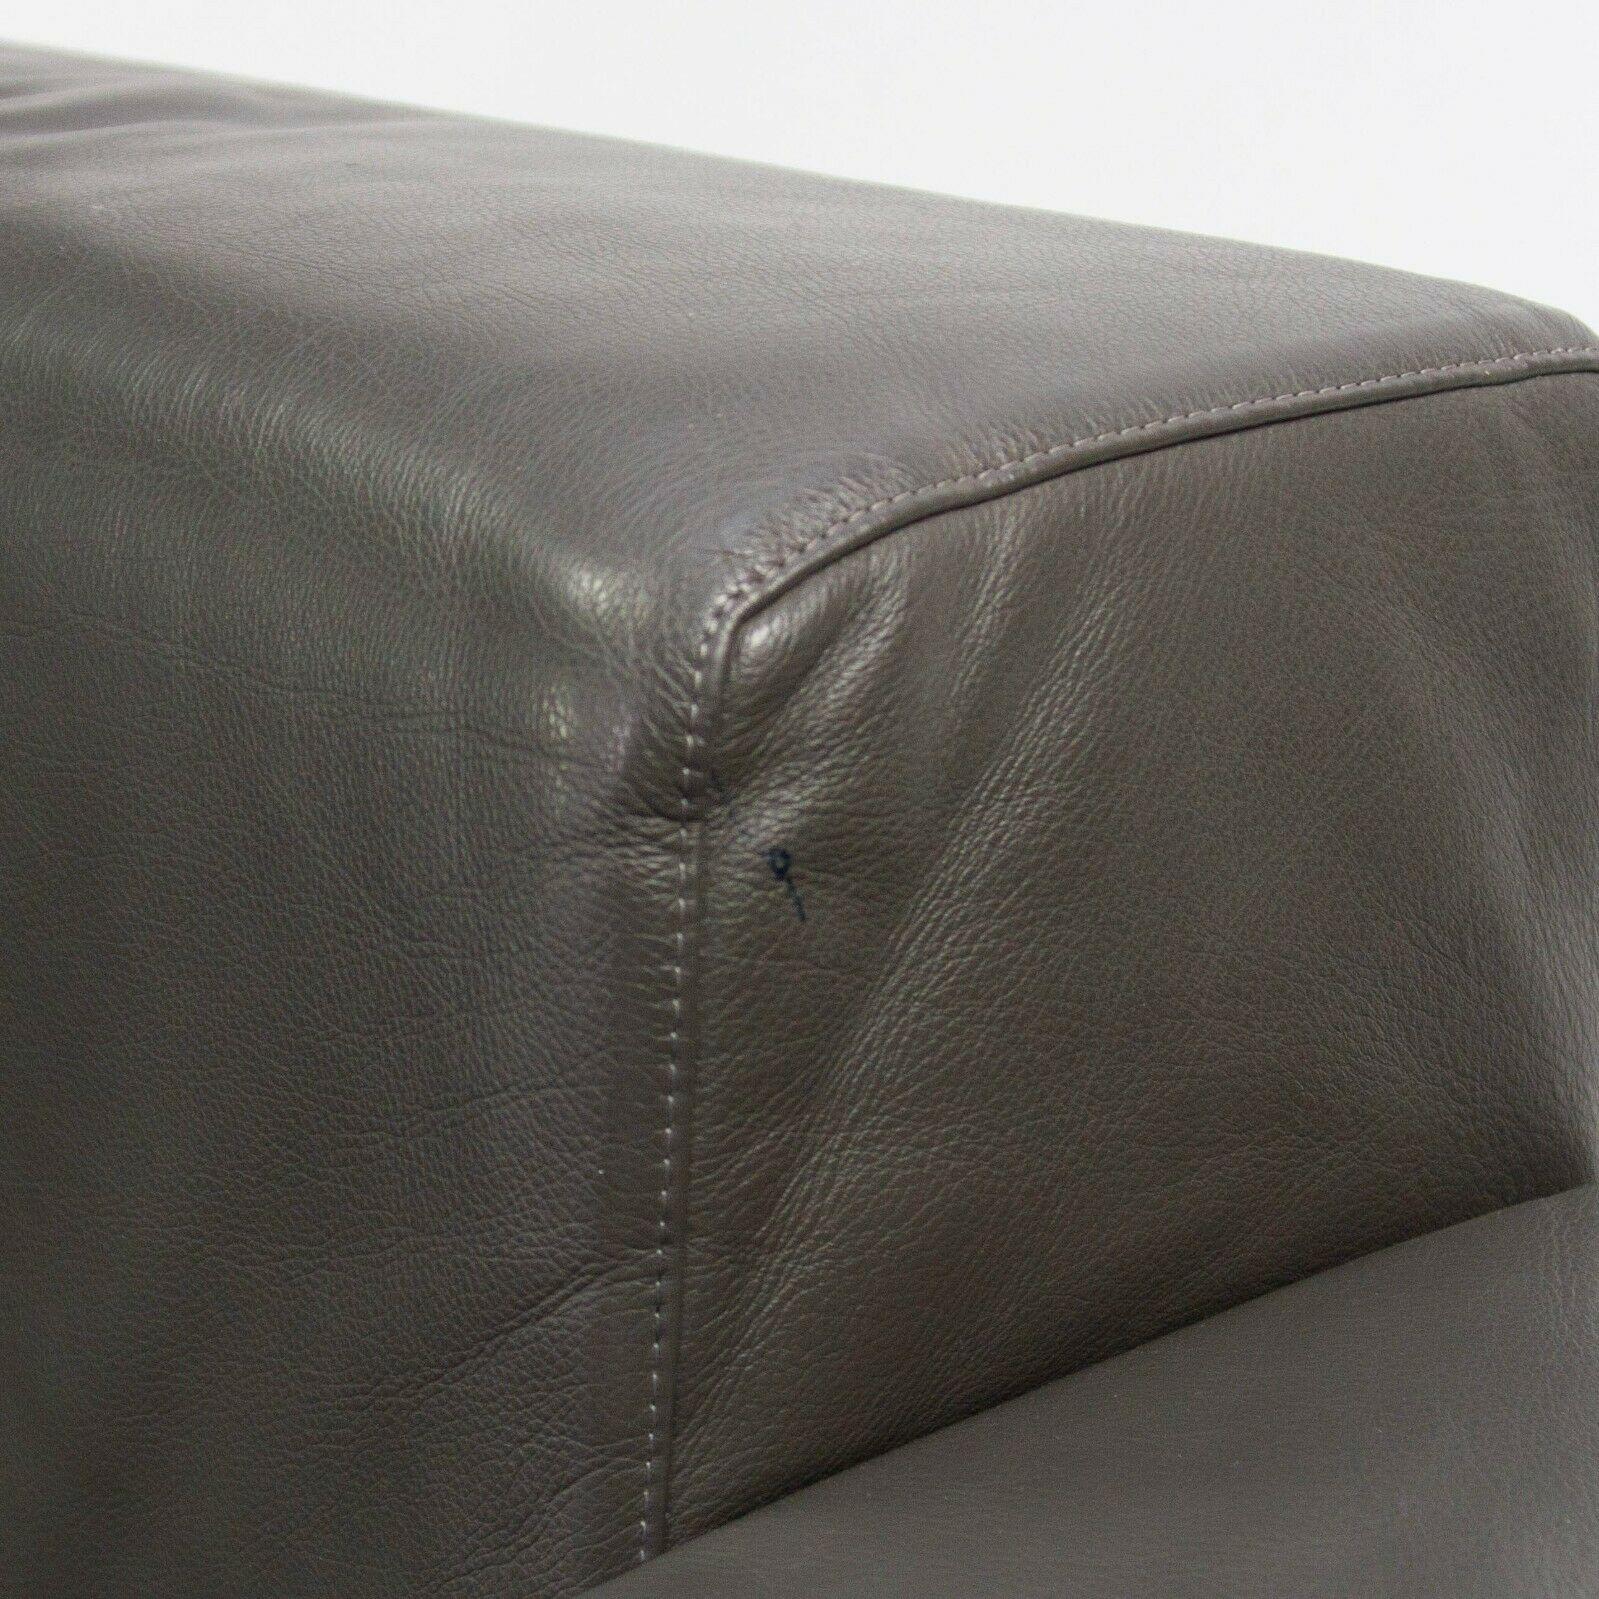 1999 Zanotta Alfa Grey Leather Sectional Modular Sofa by Emaf Progetti 2x Avail For Sale 2